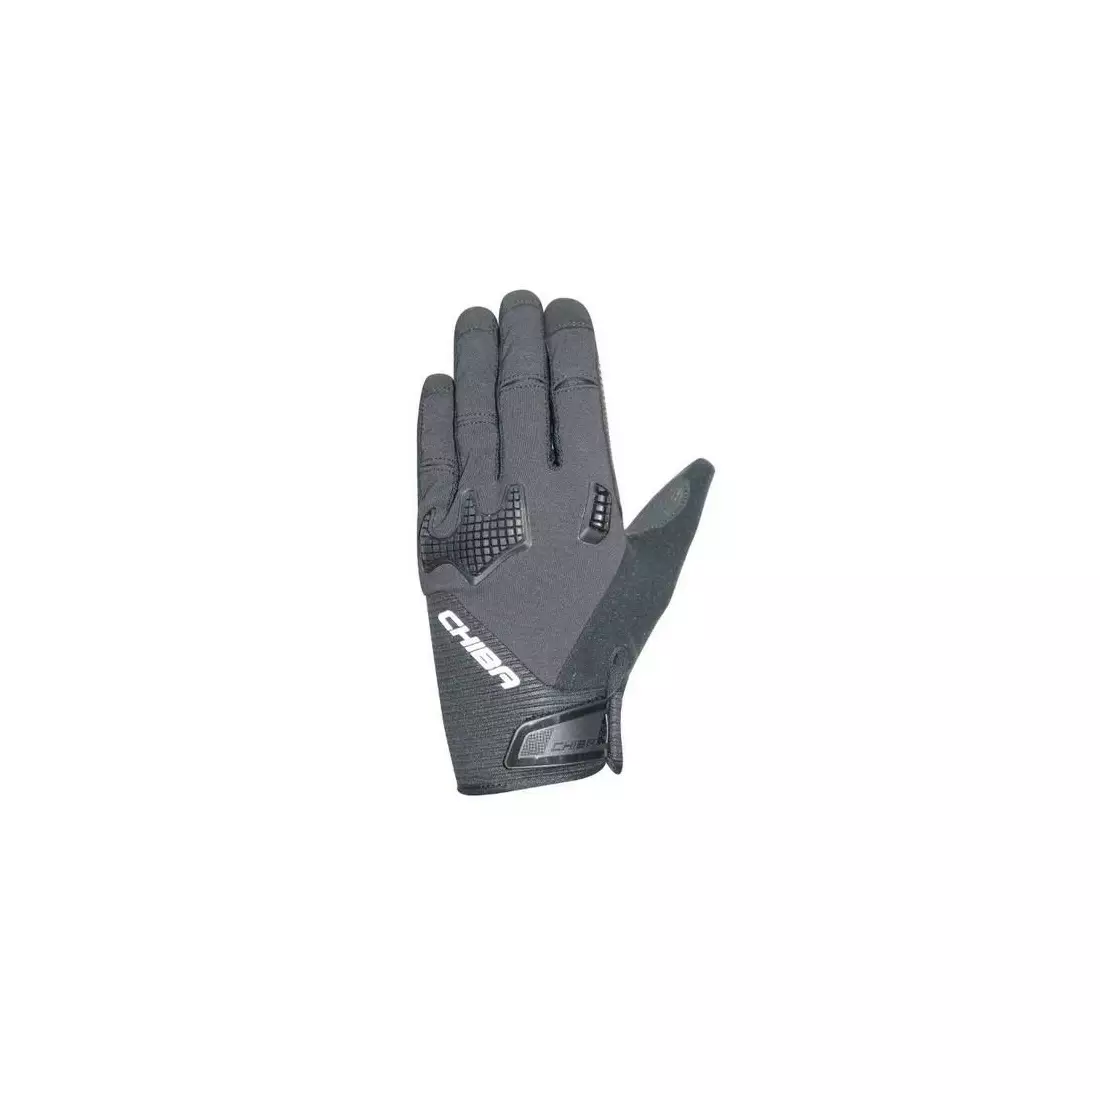 CHIBA 360 PRO cycling gloves black 3070719